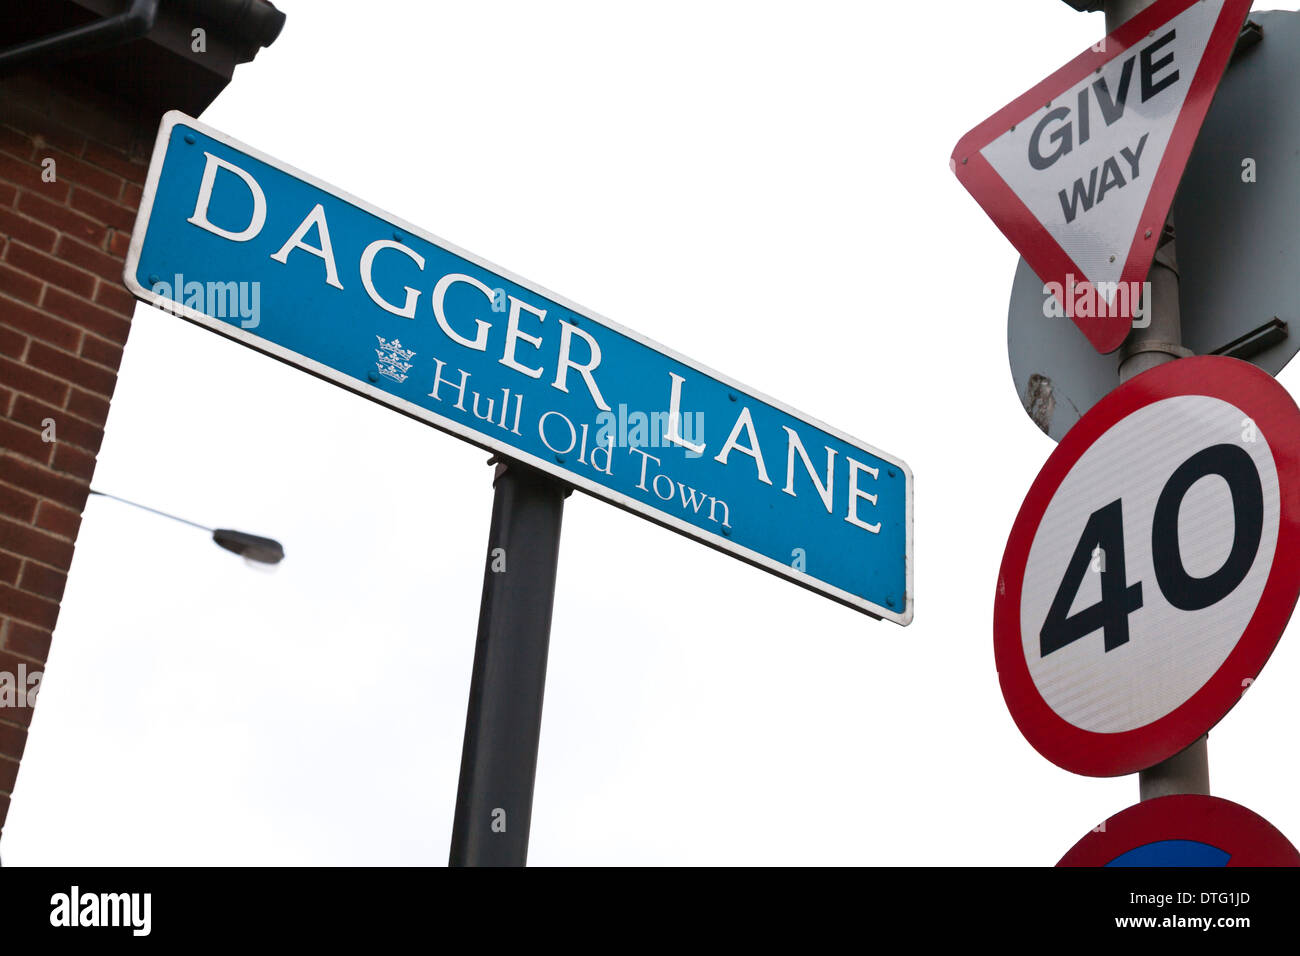 Dagger Lane road sign Kingston Upon Hull East Riding centre ville, East Yorkshire, England, UK GO photos photos de signes Banque D'Images